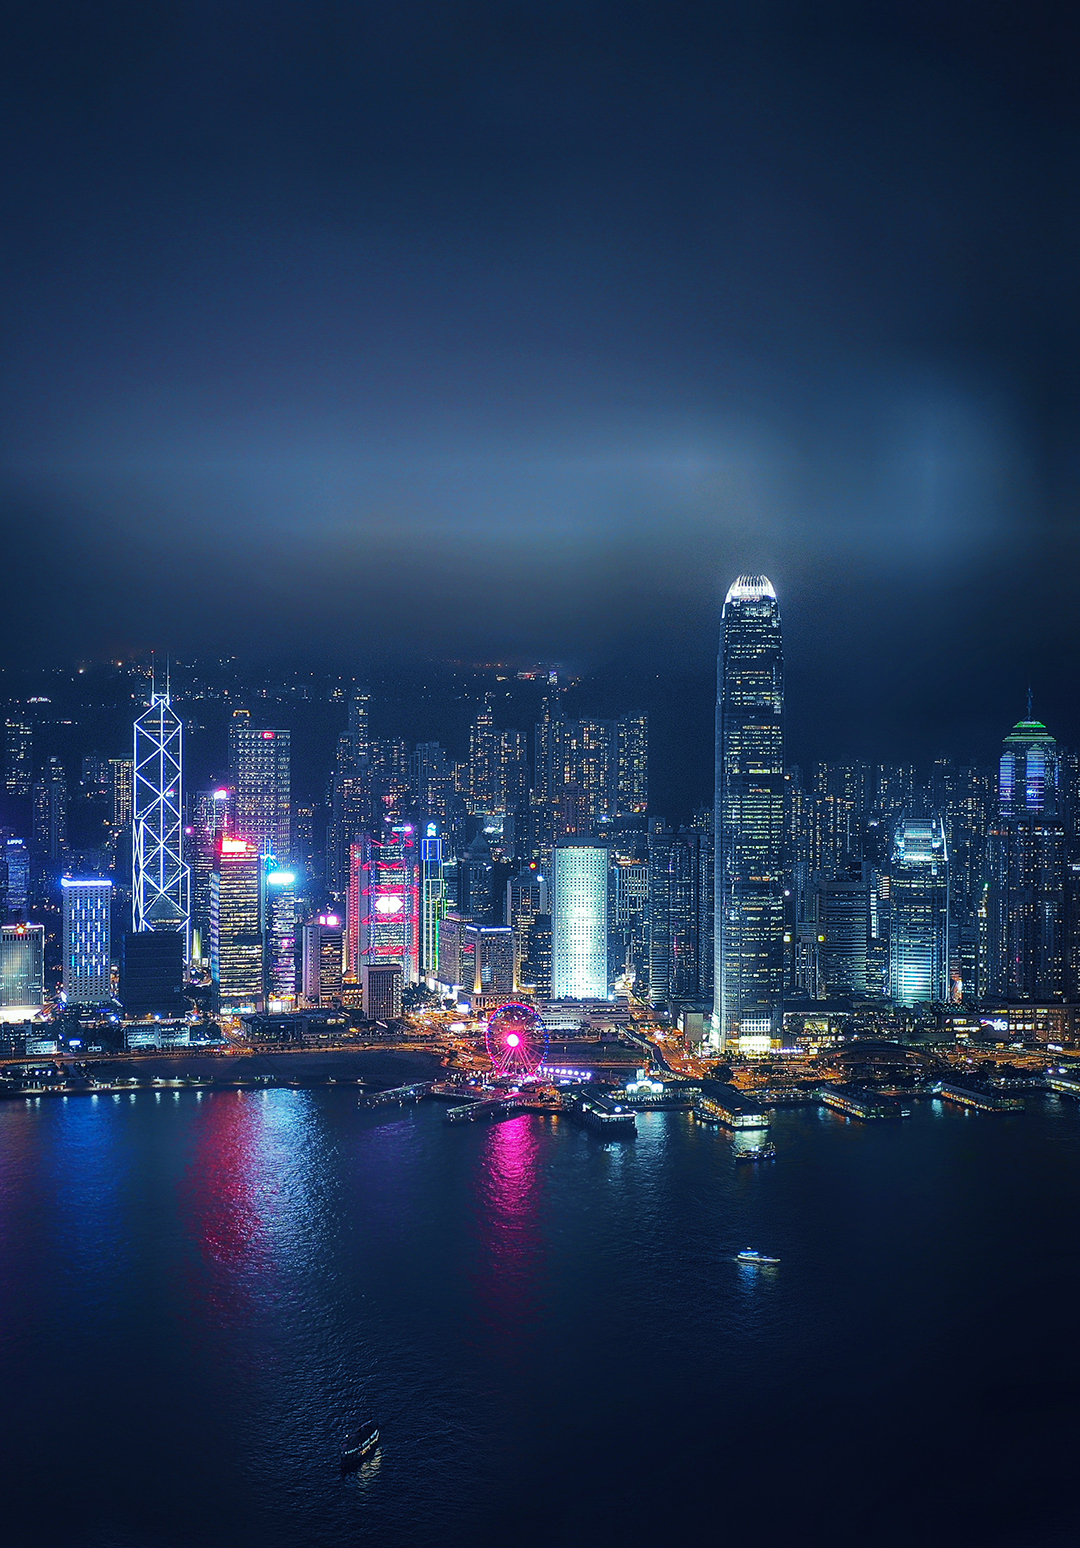 Turisticne_znamenitosti_Hong_Konga_-_Tourist_attractions_of_Hong_Kong_-_Photo_by_Dadan_Fitrayana_from_Pexels.jpg